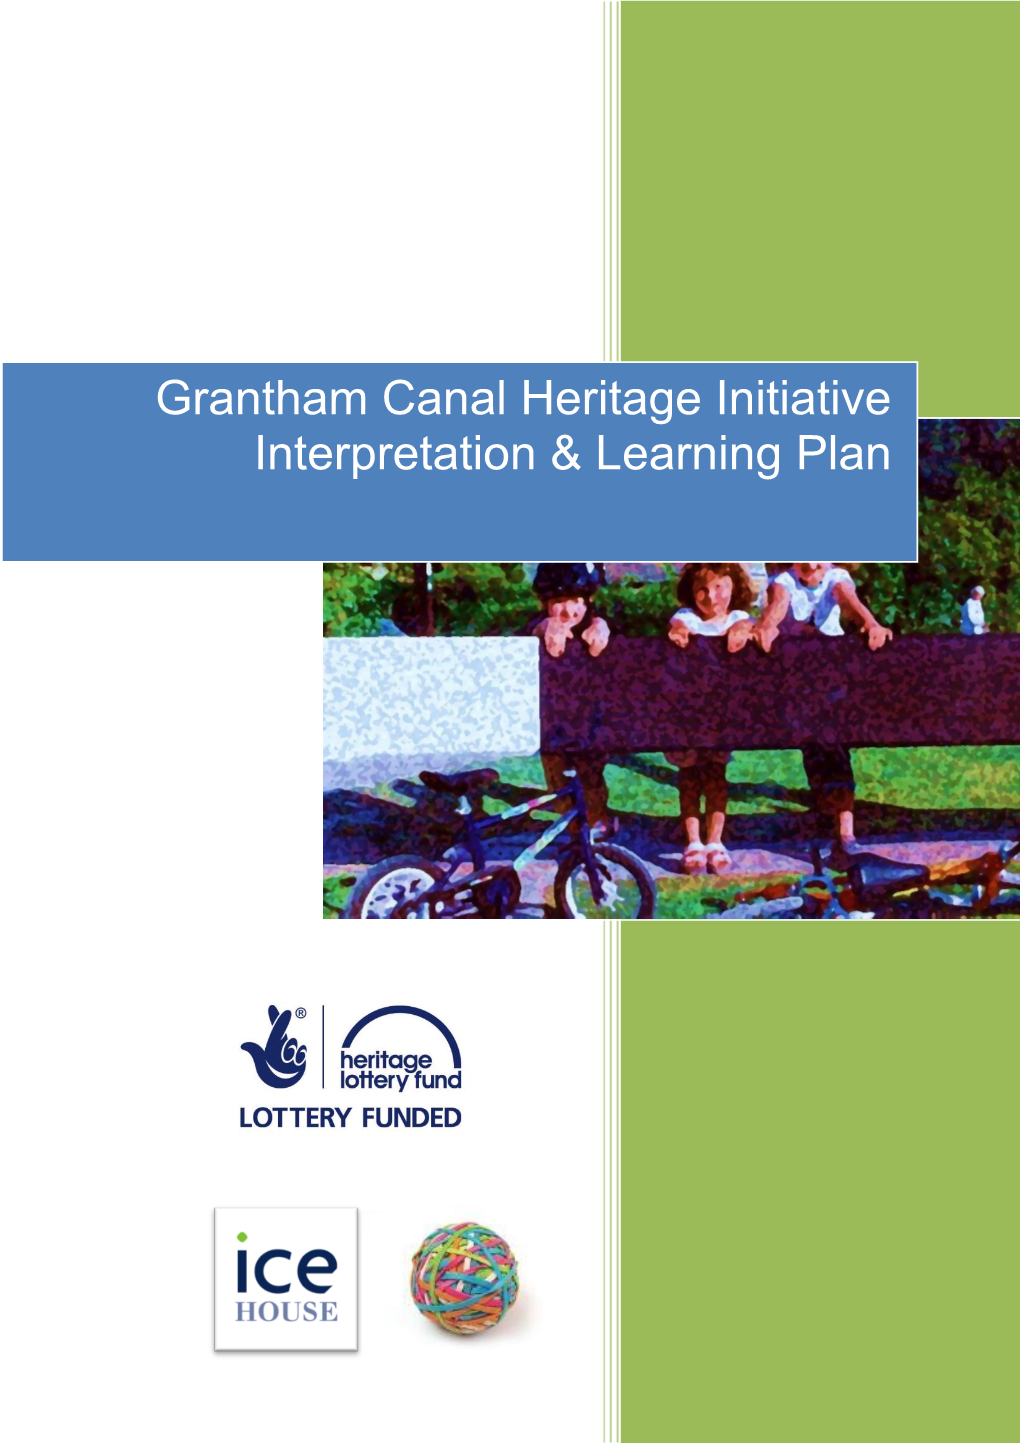 Grantham Canalgrantham Heritage Canal Heritage Initiative Initiative Activity Plan Interpretation & Learning Plan